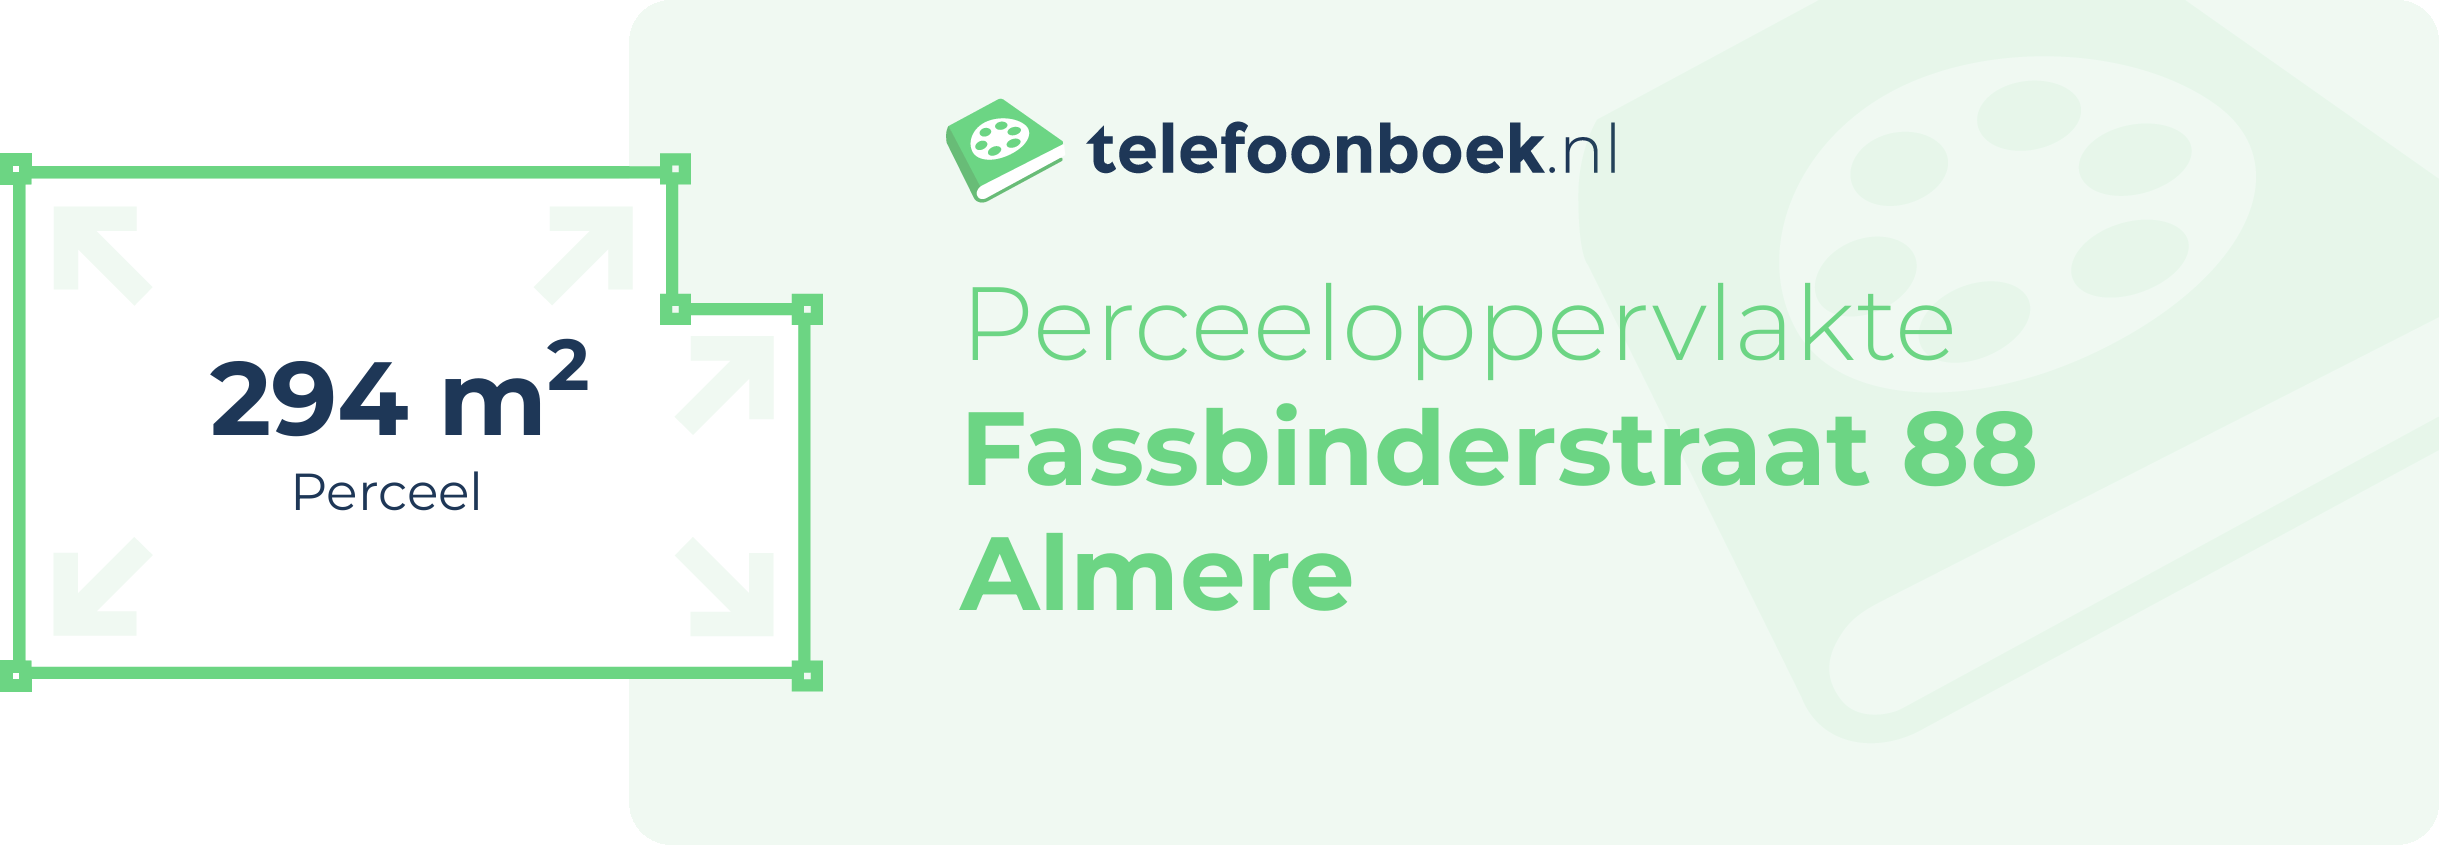 Perceeloppervlakte Fassbinderstraat 88 Almere